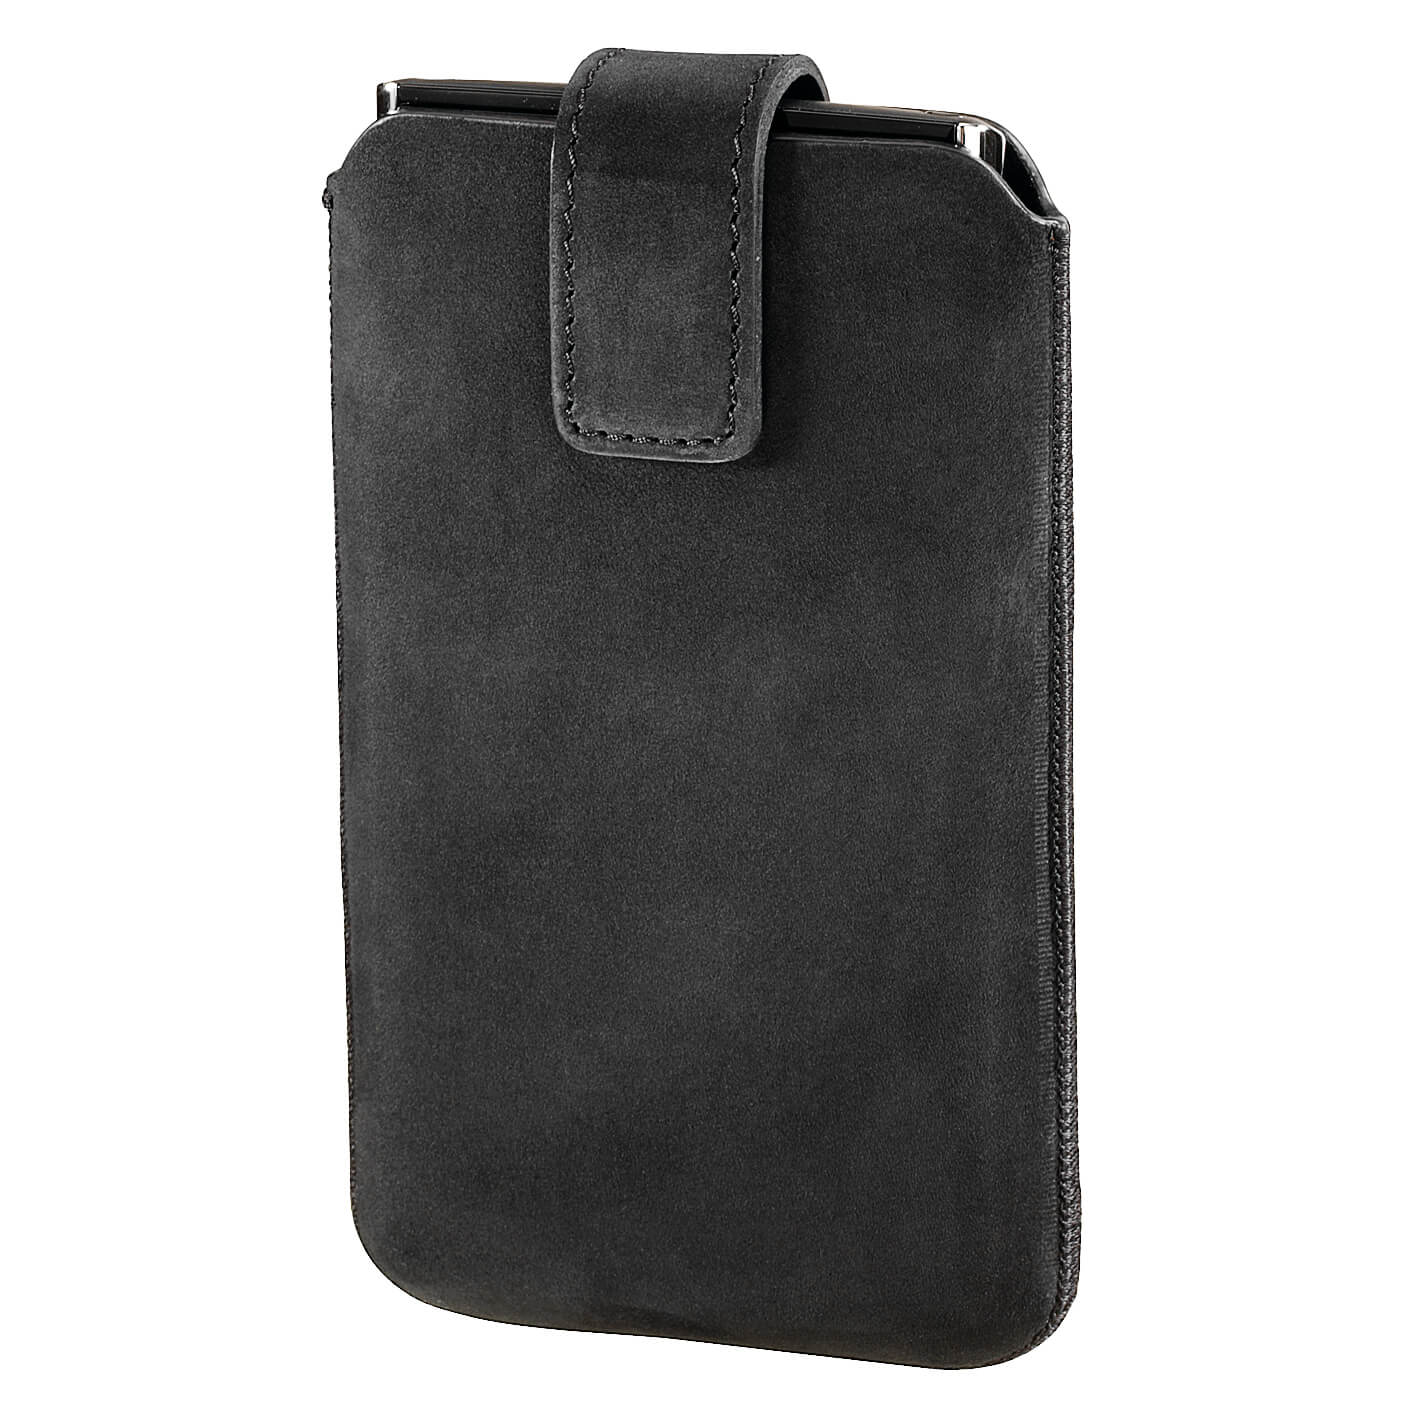 Chic Case Smartphone Sleeve, size L, black